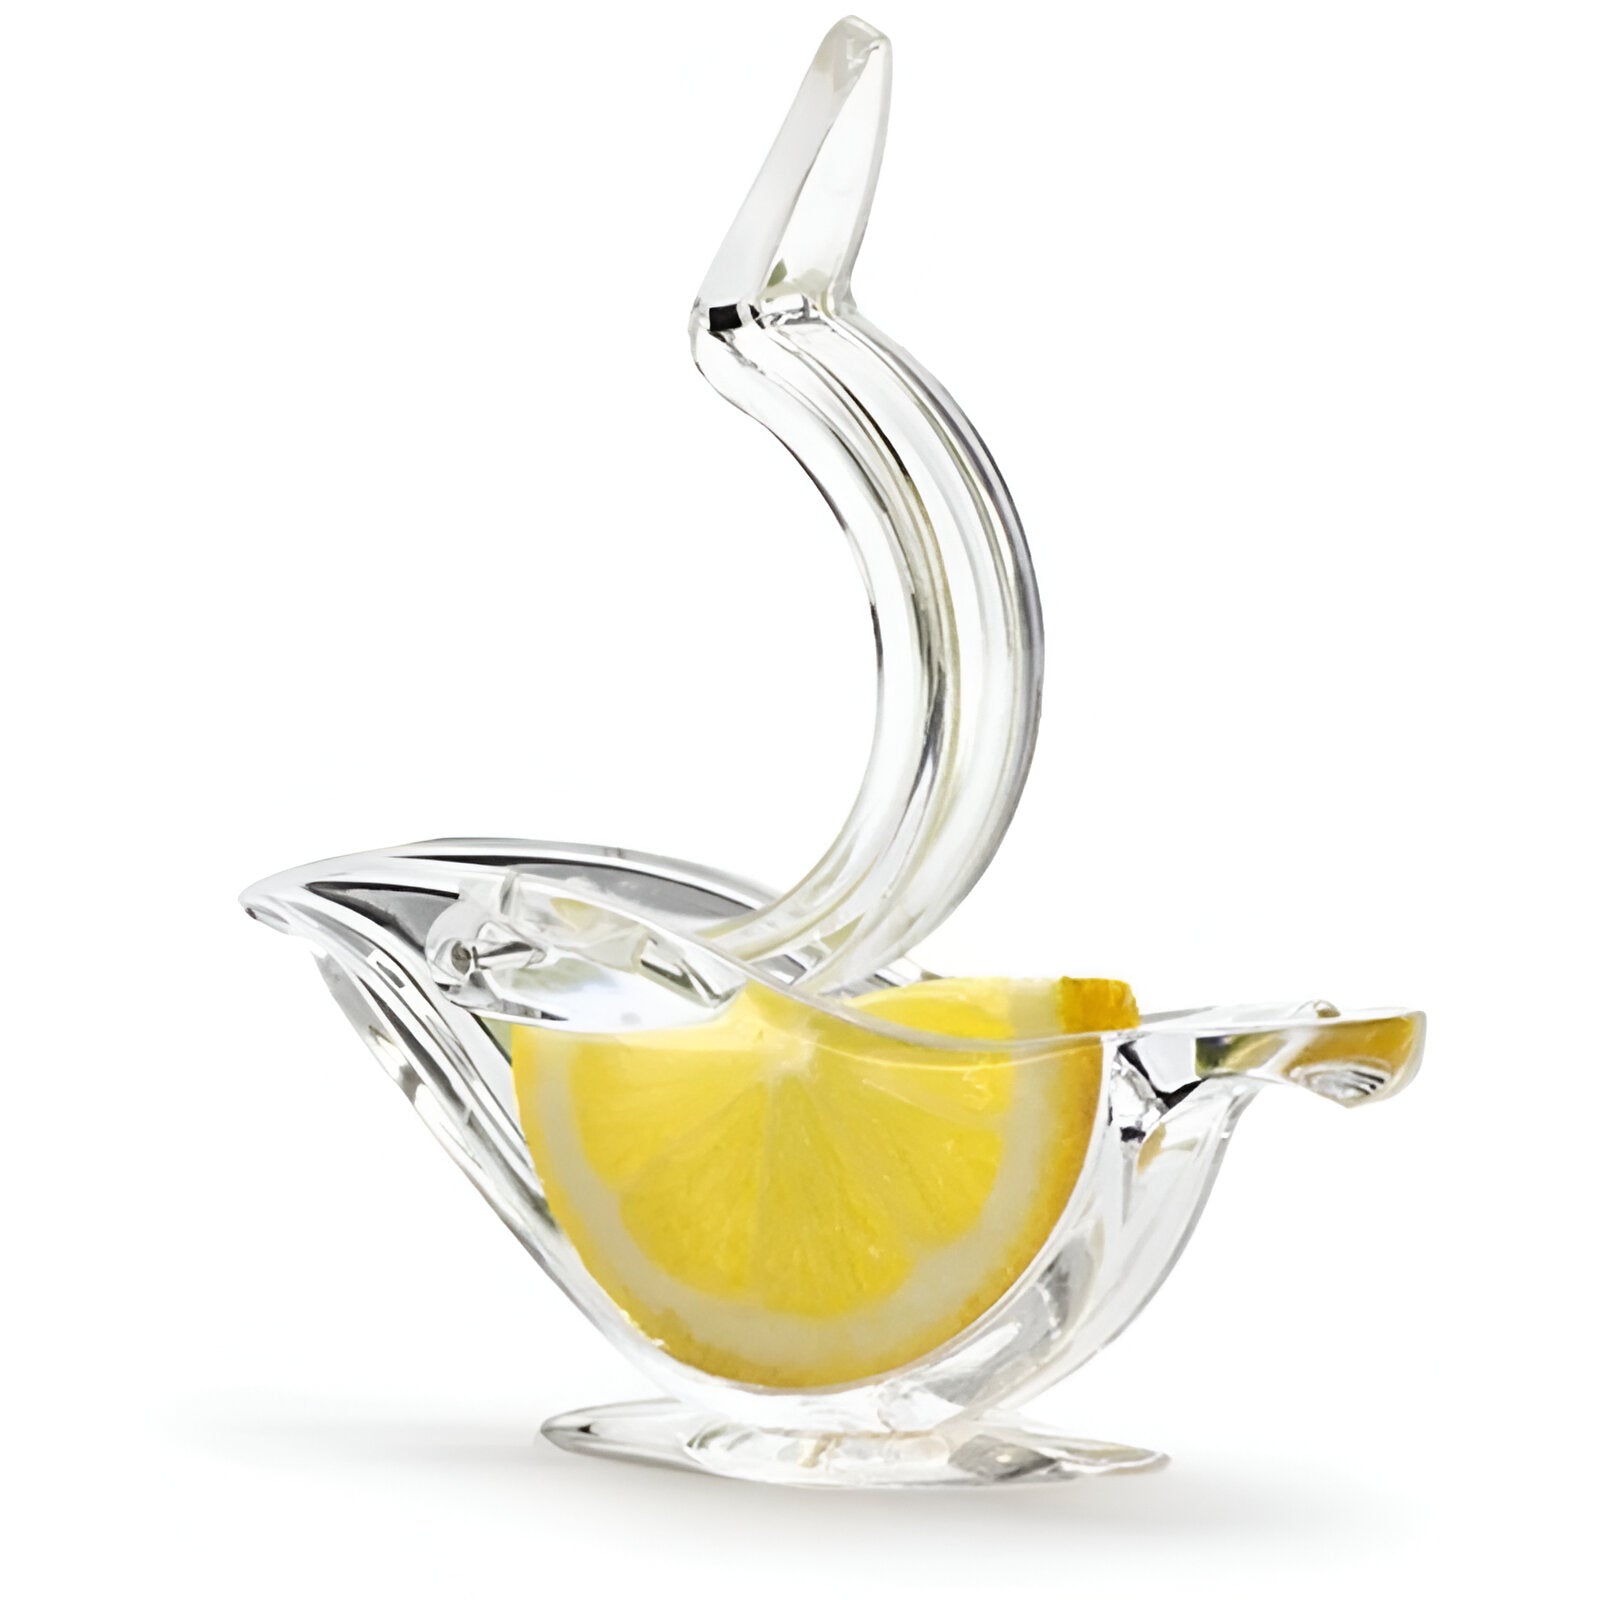 Bird-shaped fruit juicer